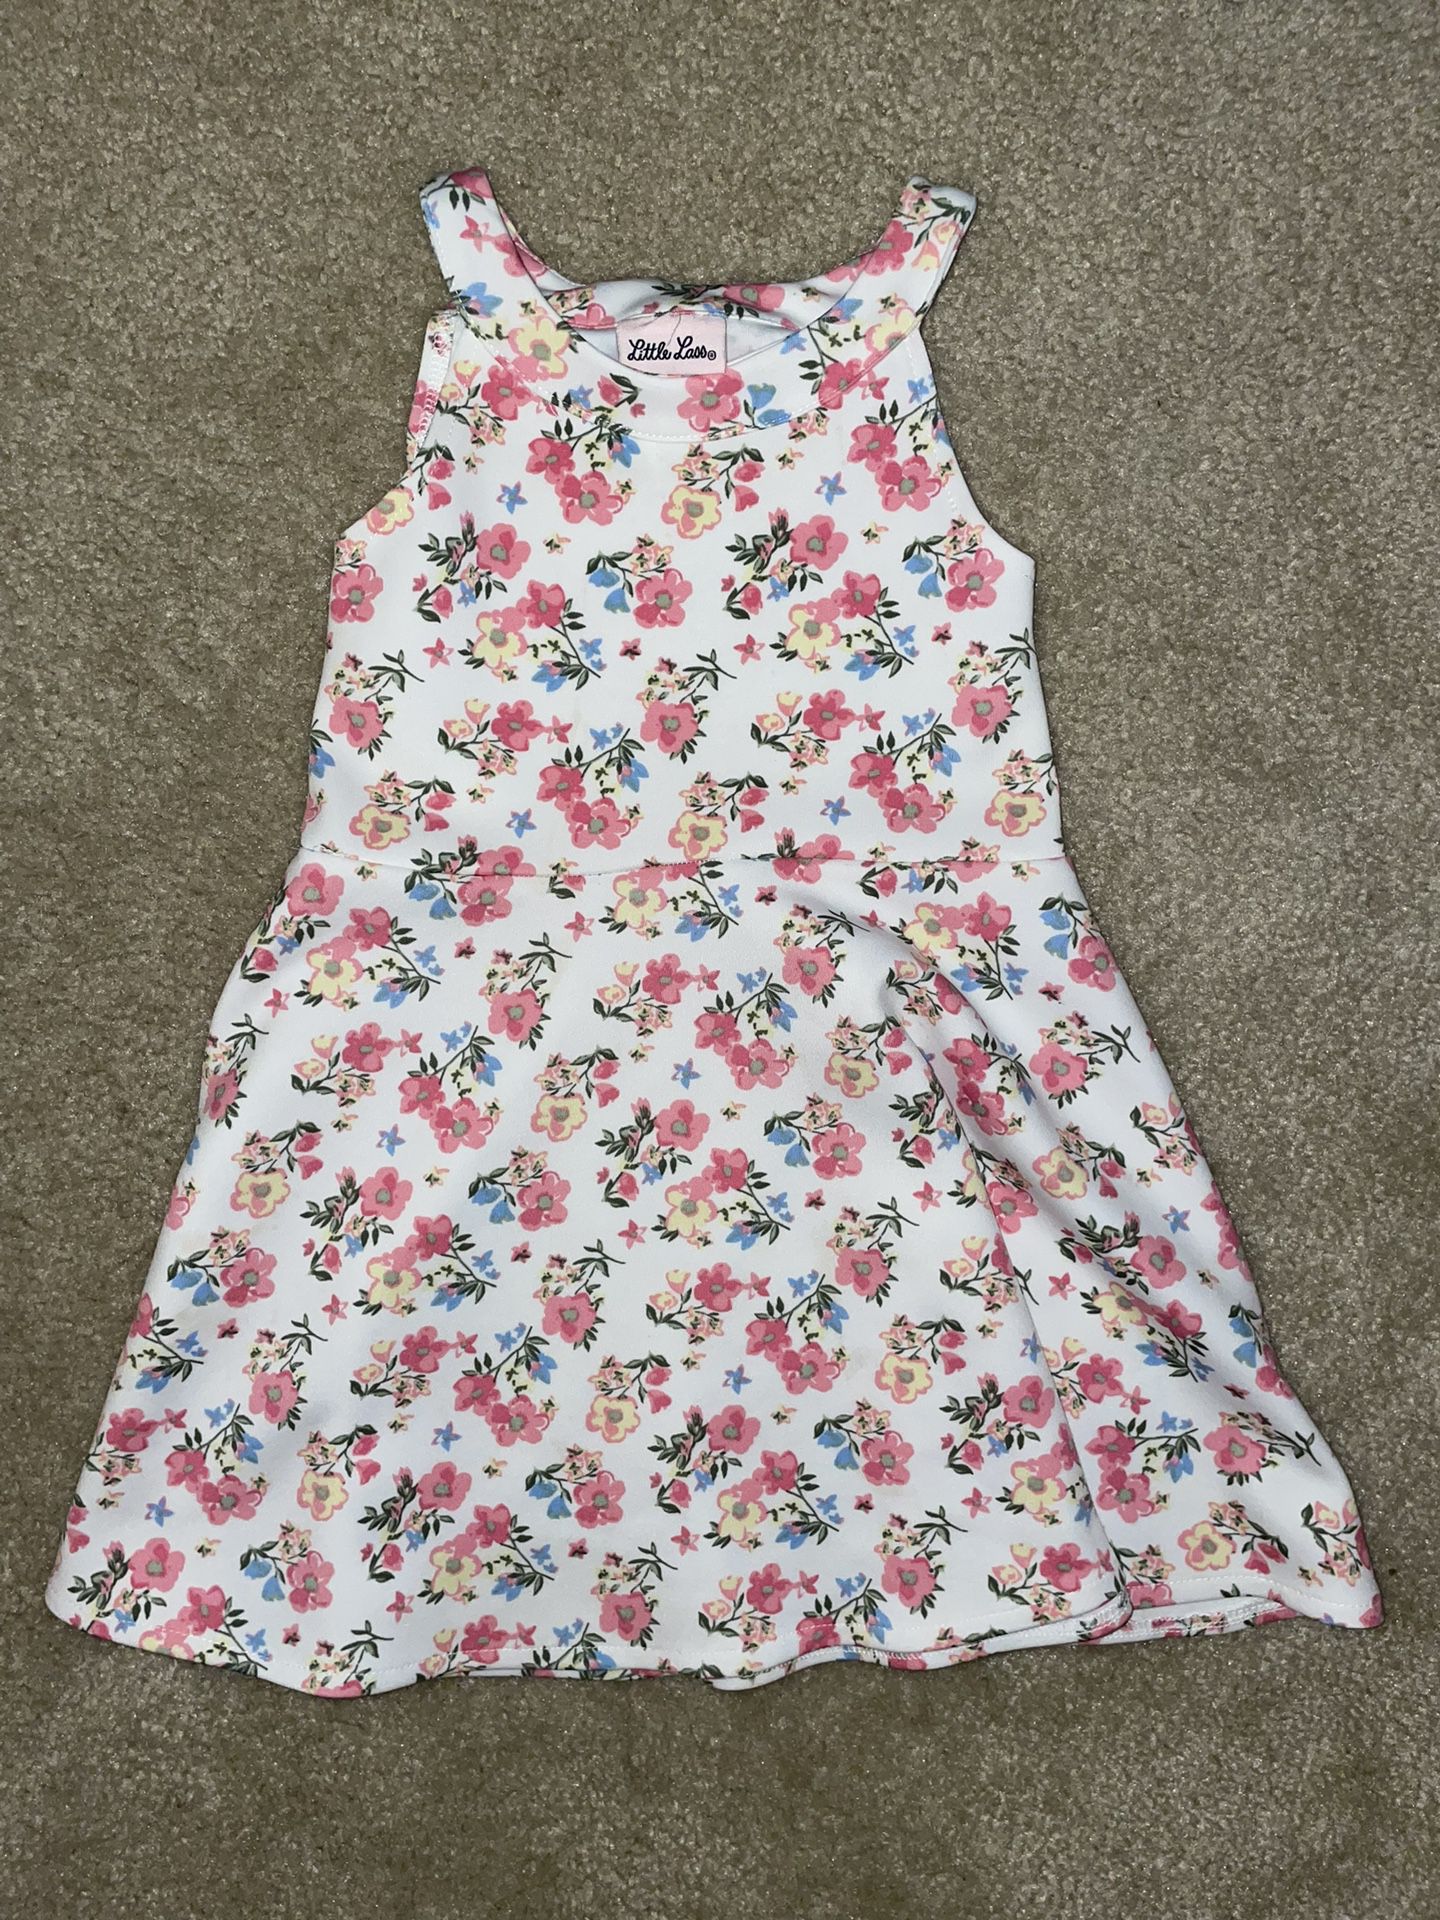 Girls Flower Dress, Size 5